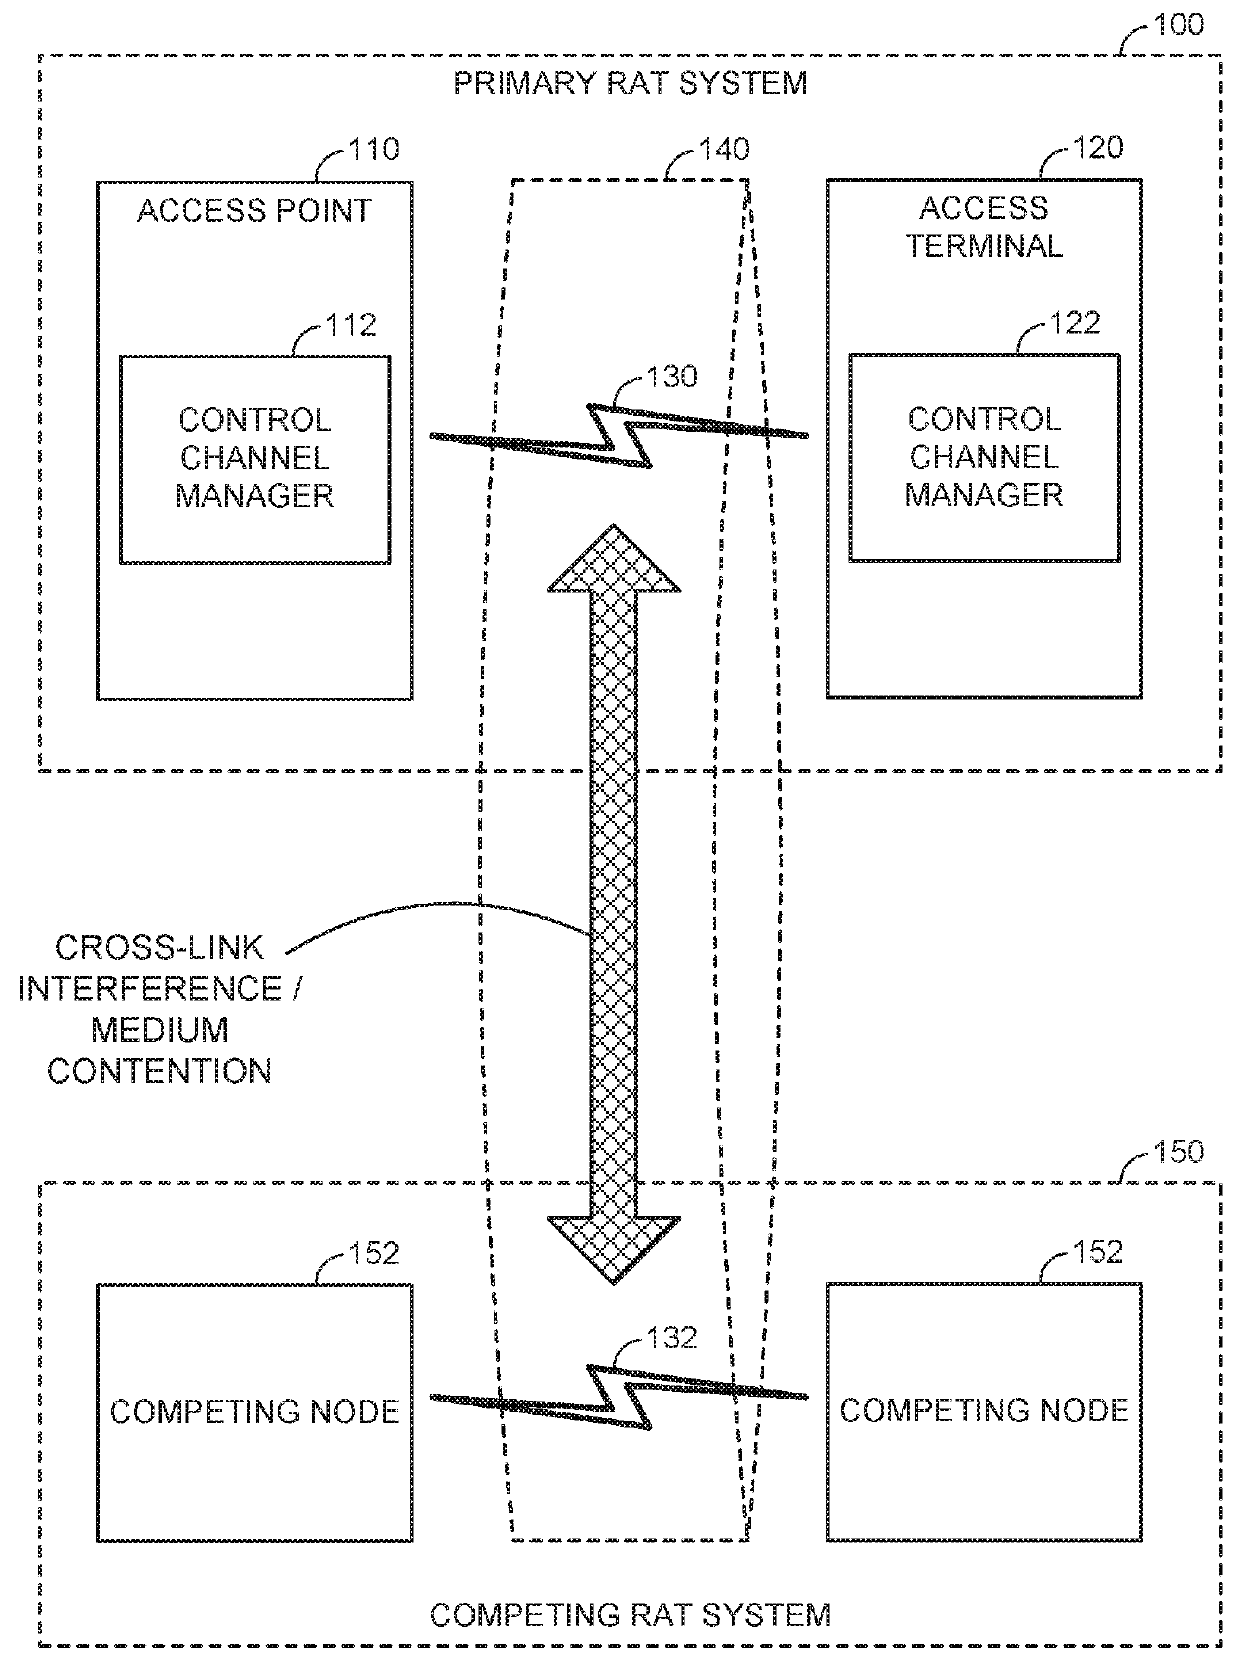 Uplink control signaling on a shared communication medium